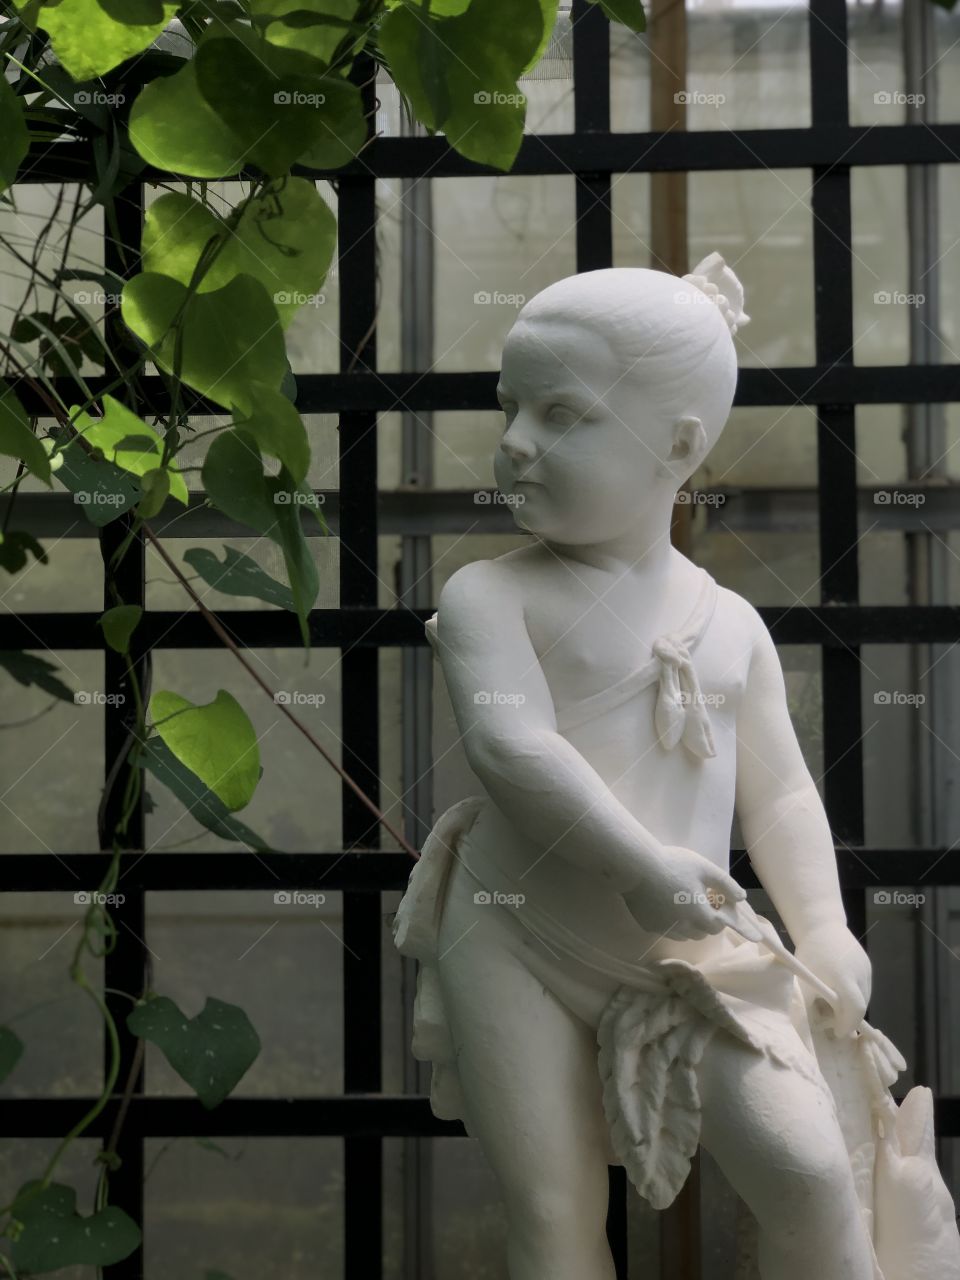 White cherub statue in greenhouse garden